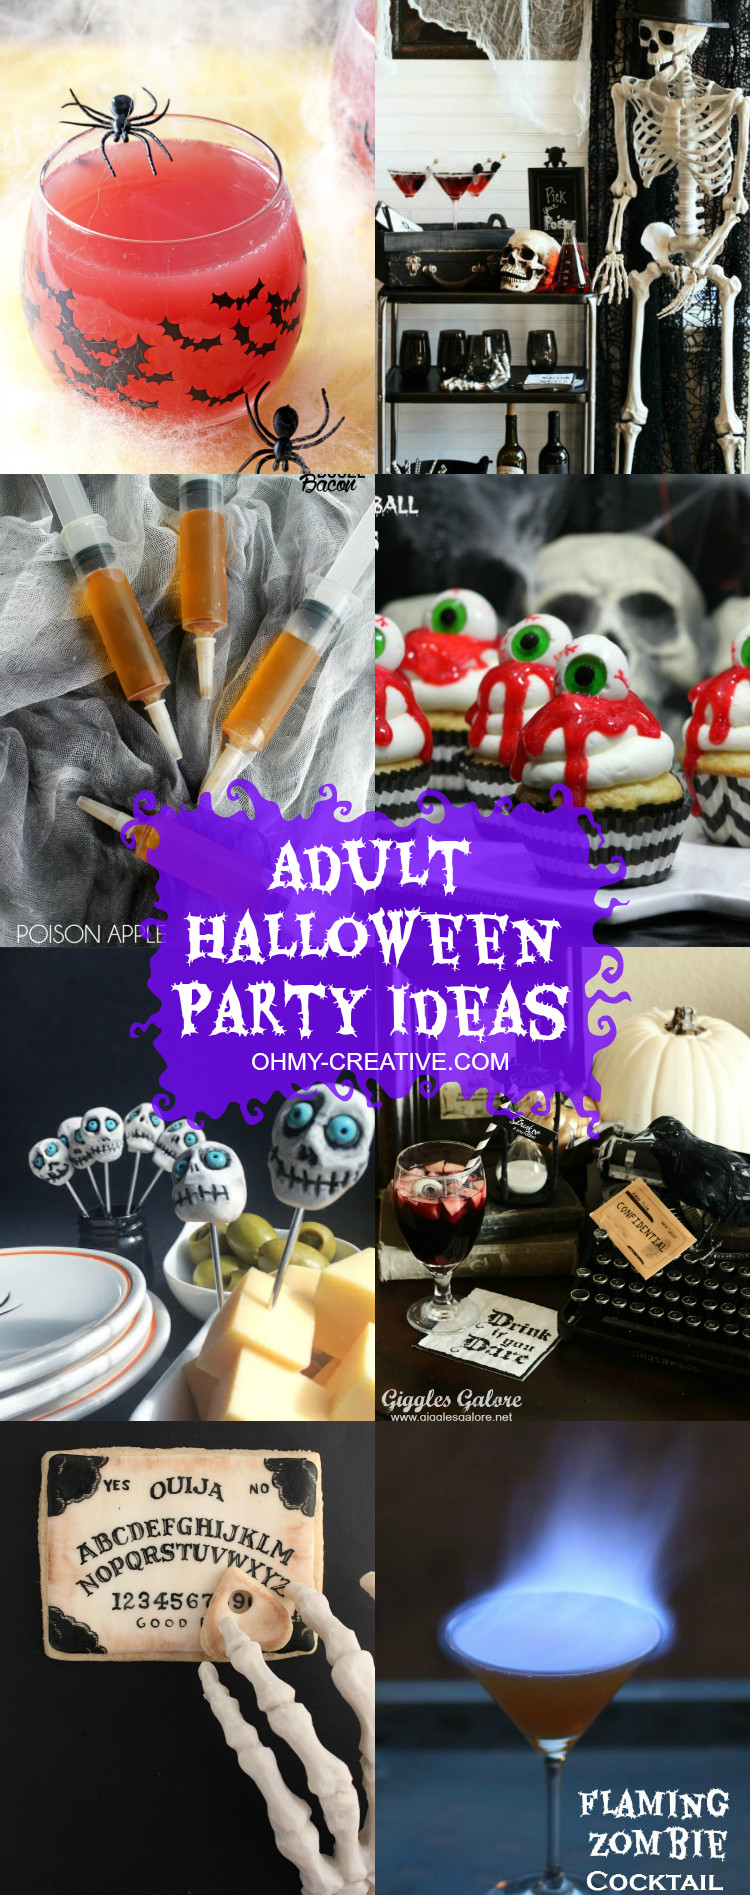 Adult Halloween Party Ideas
 Adult Halloween Party Ideas Oh My Creative